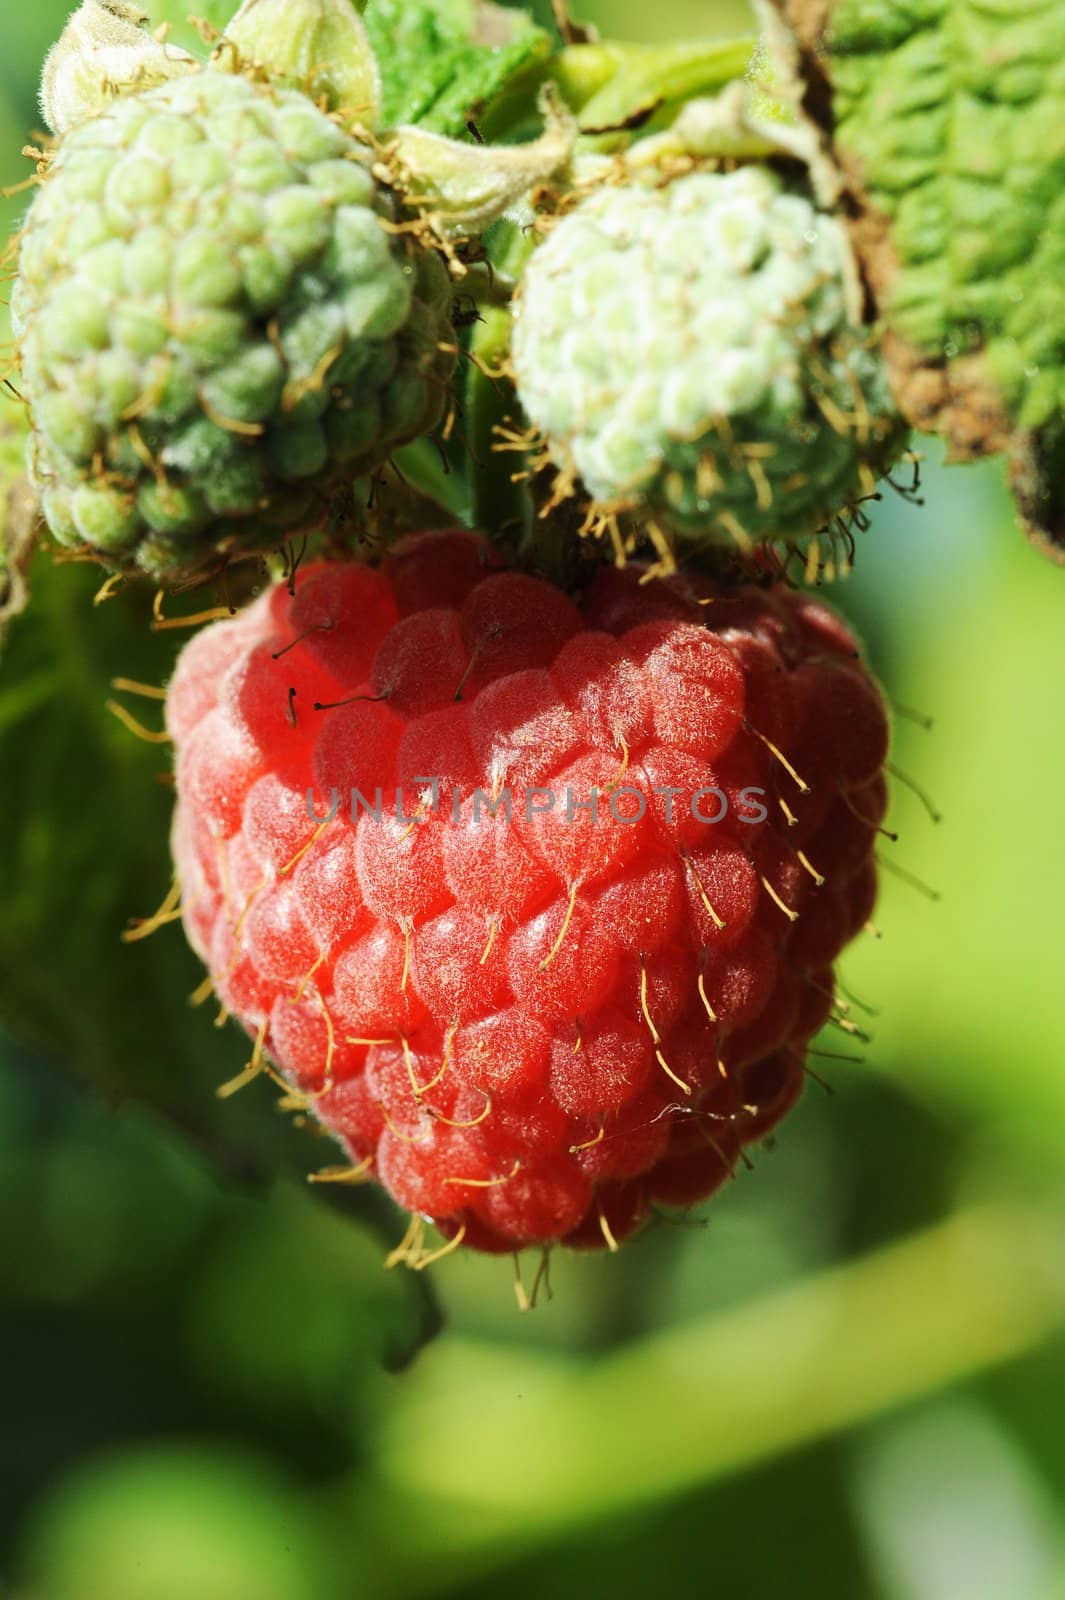 Raspberry growing by avix